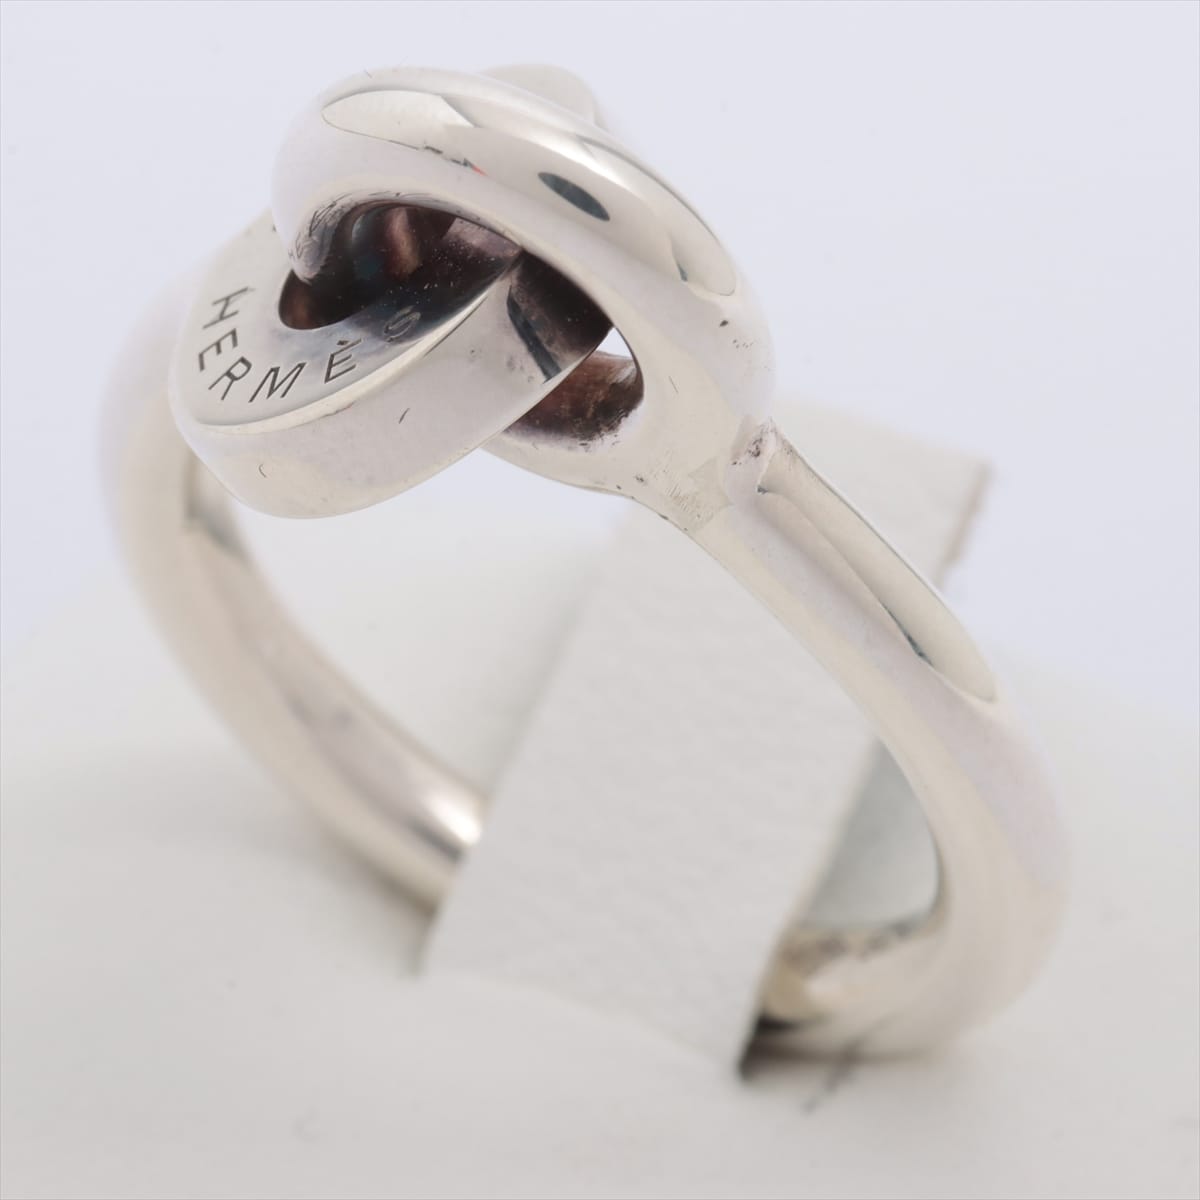 Hermès Serie rings 925 7.1g Silver